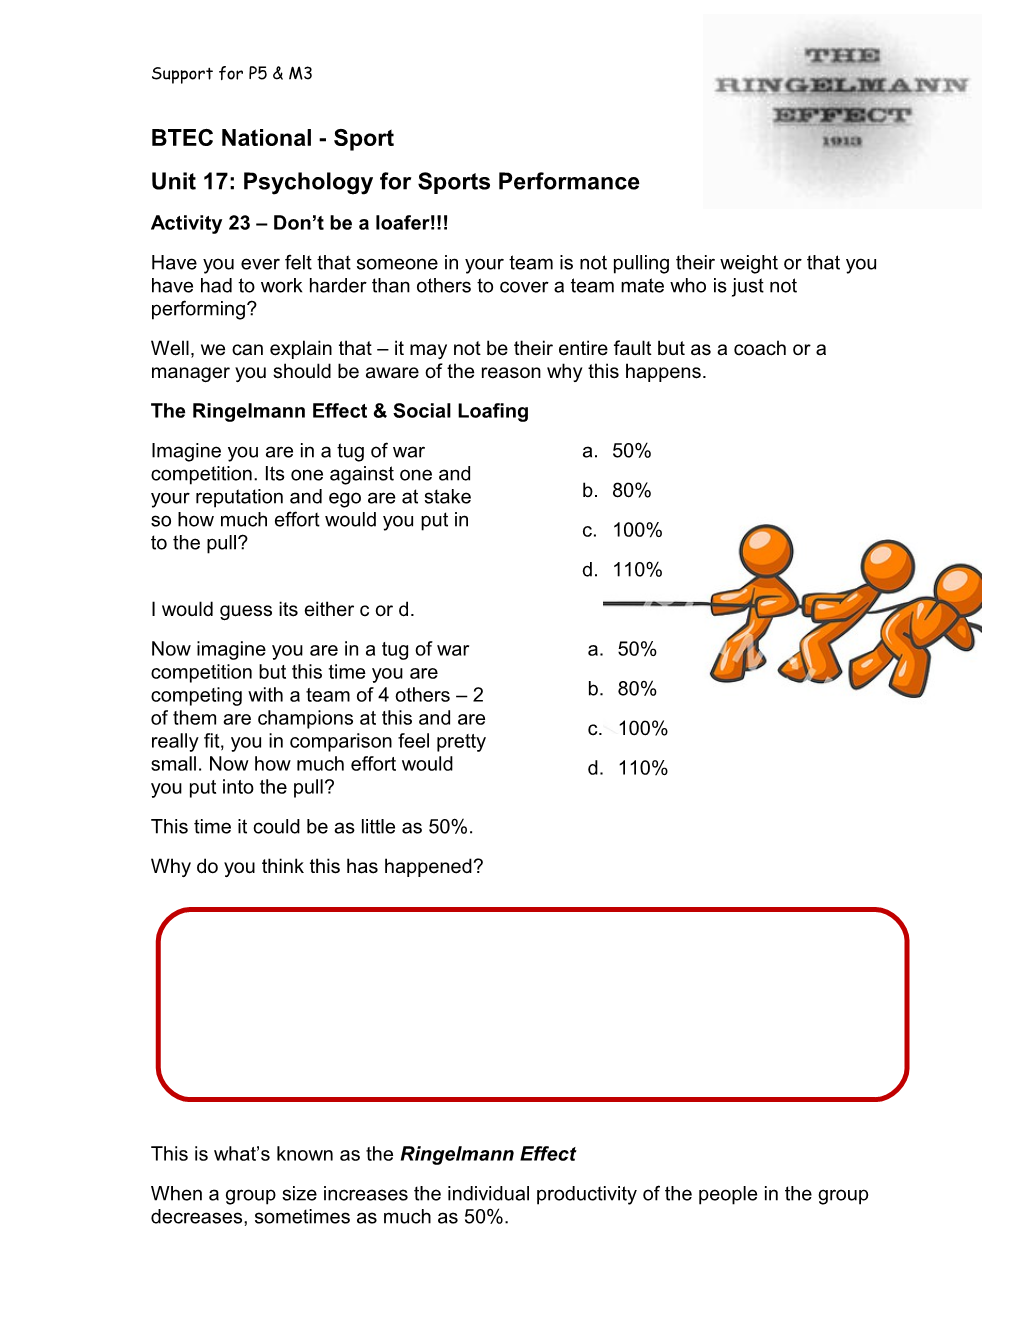 Unit 16: Psychology for Sport Performance